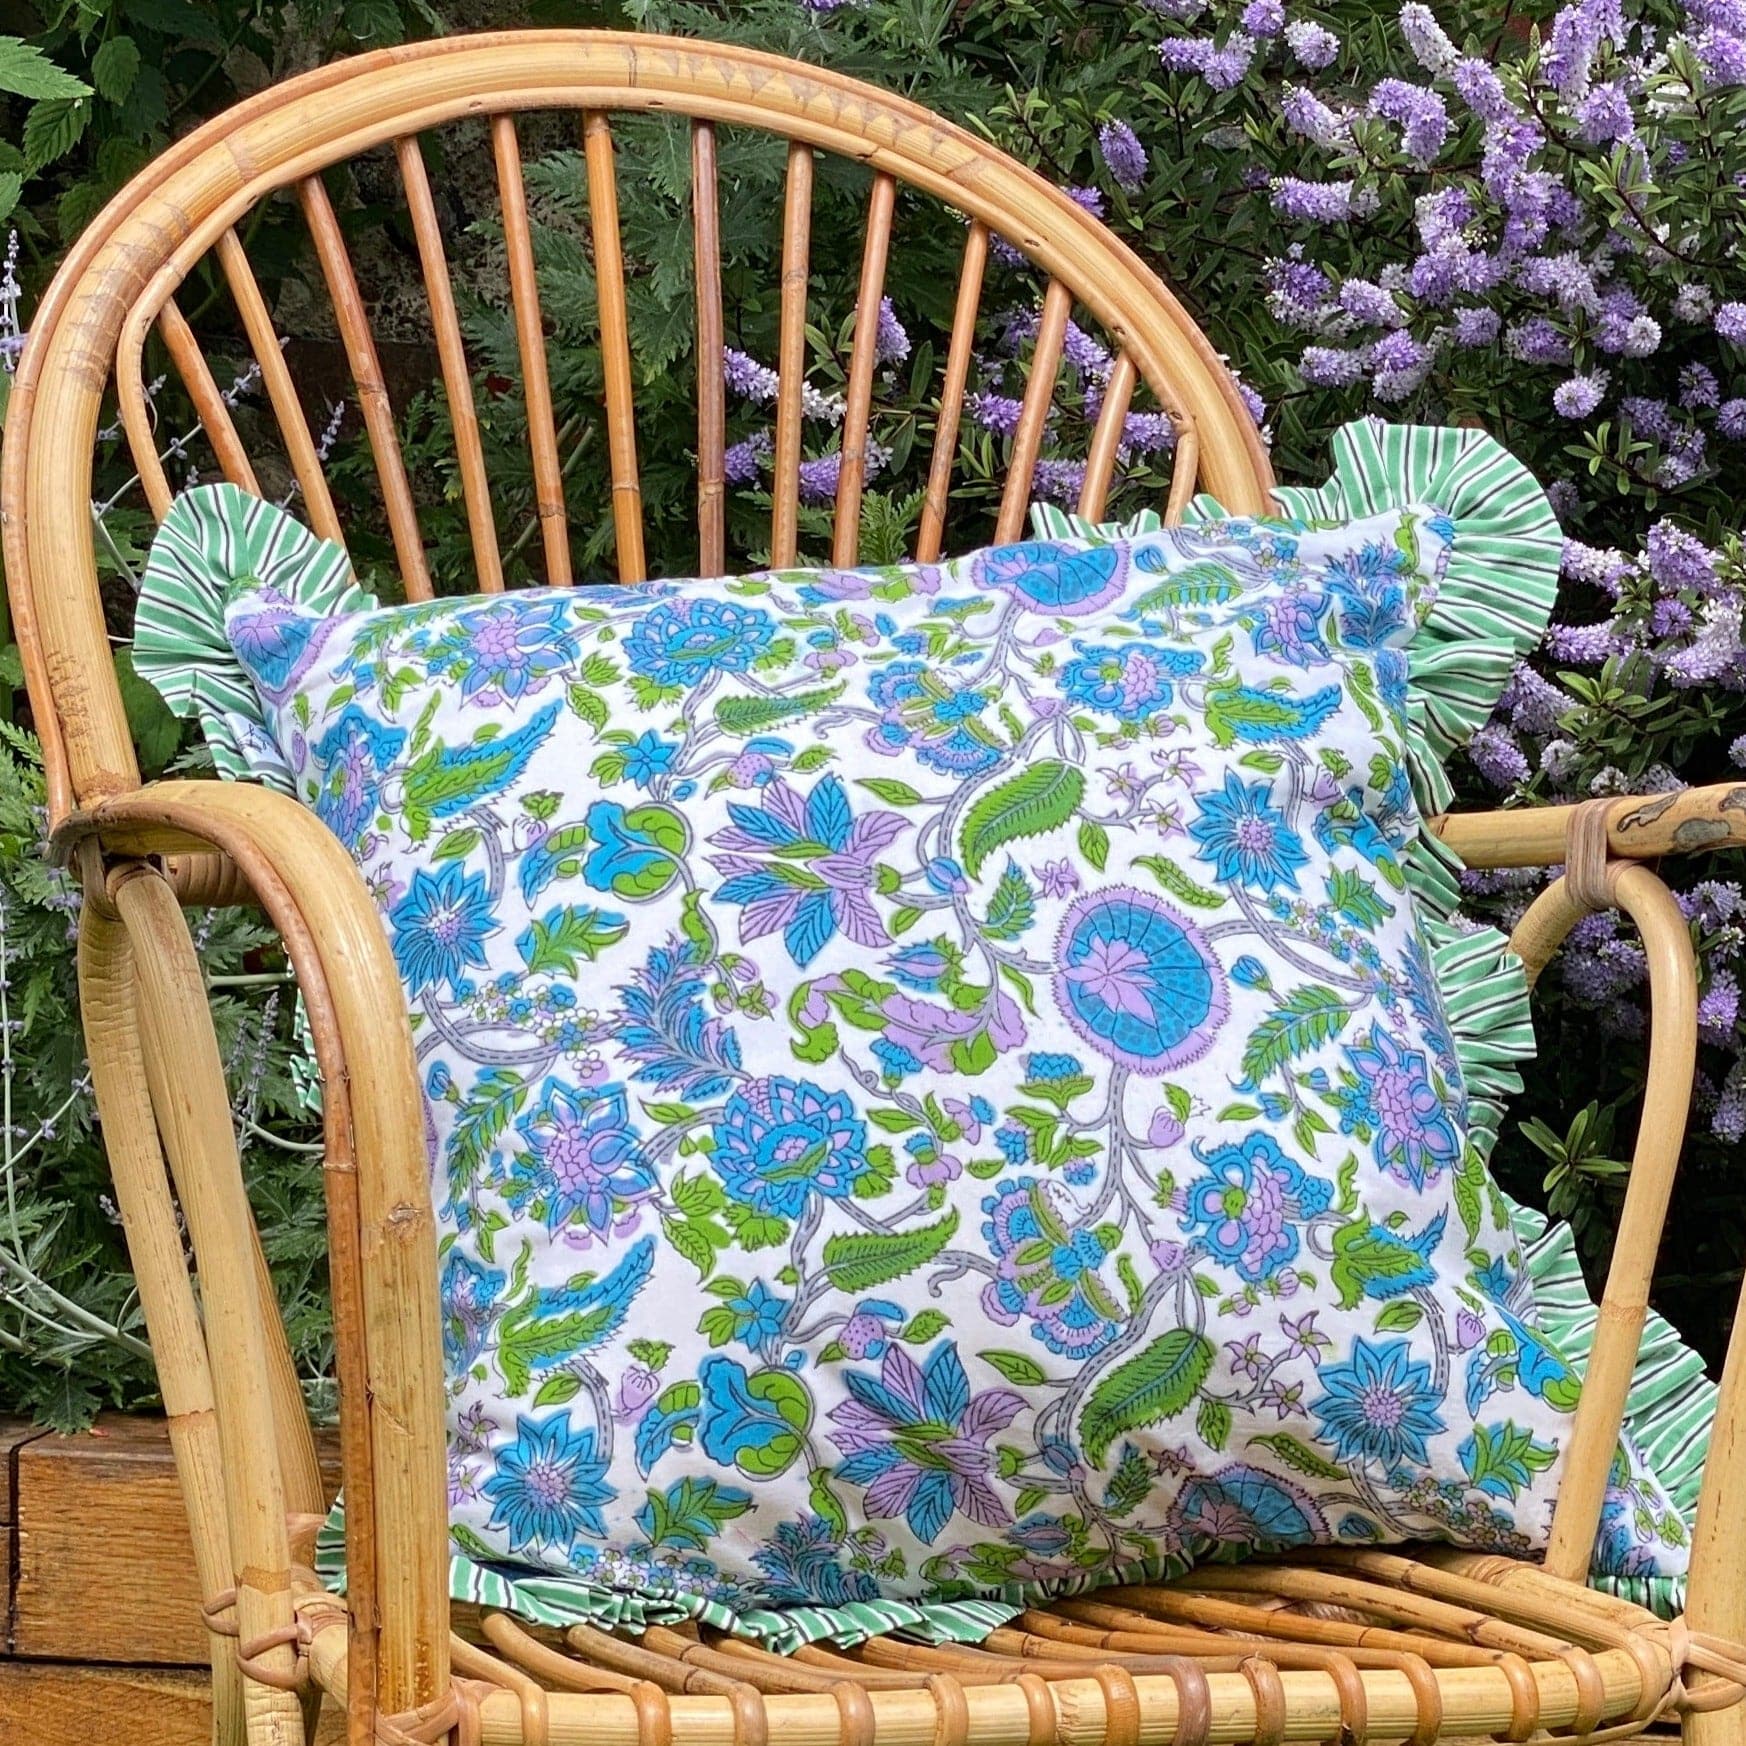 Chippa Arts (Nitin) Cushions Ruffle Cushion - Violet/Blue Floral Grn/Blk Stripe 18677